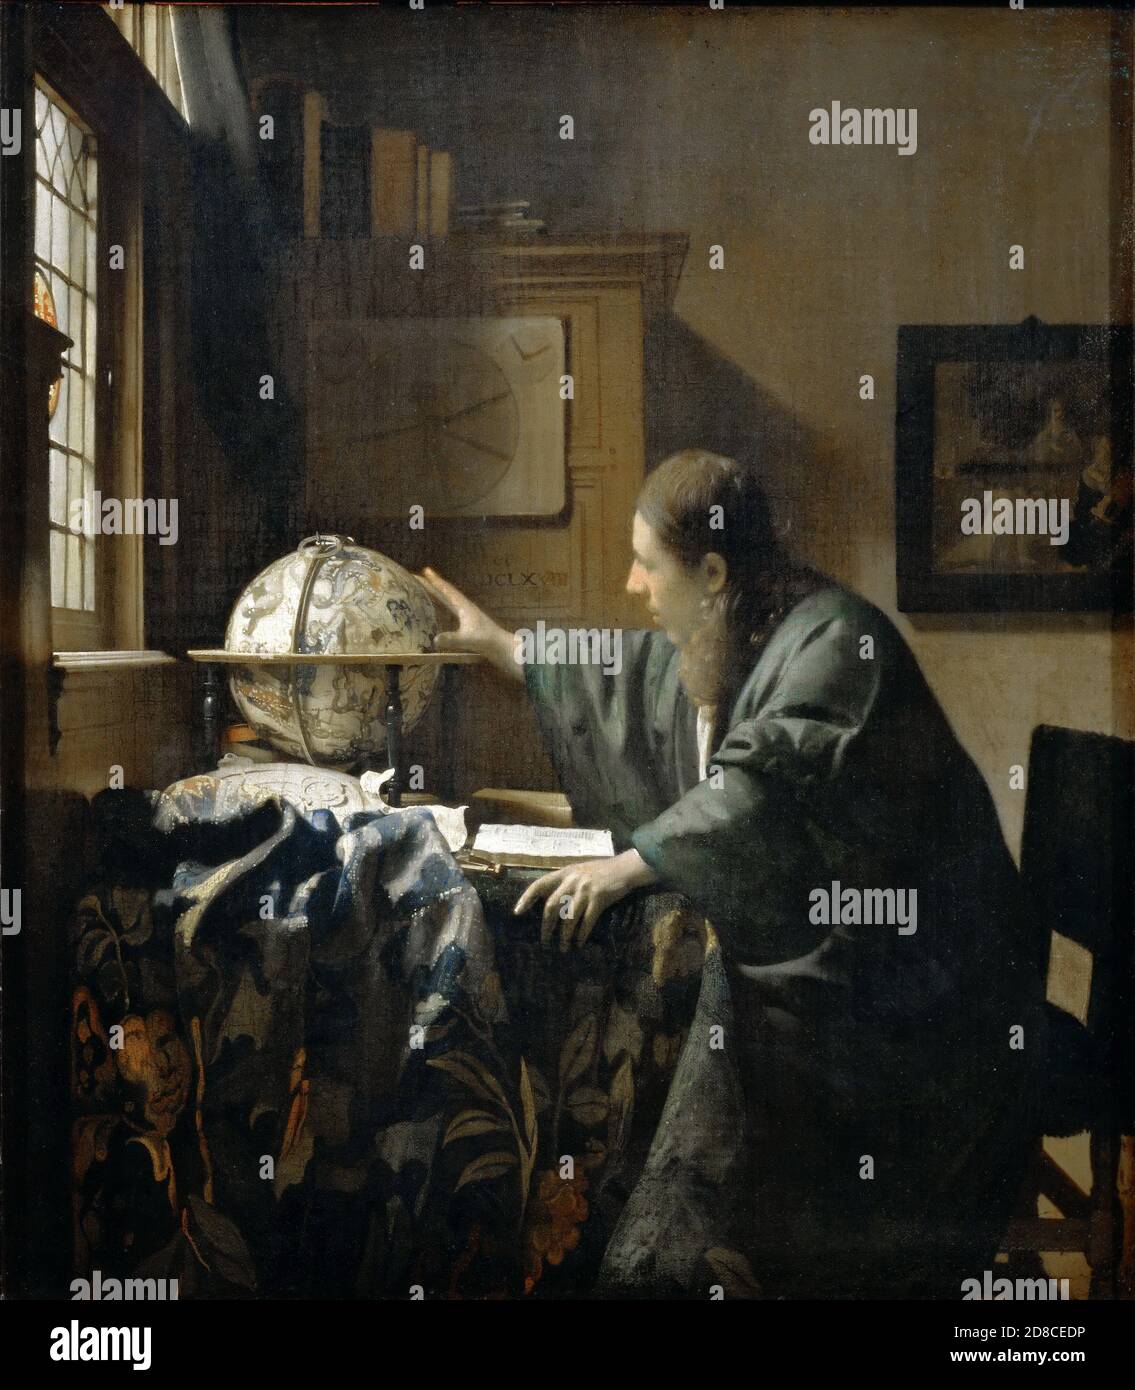 Titel: Der Astronom Ersteller: Johannes Vermeer Datum: 1668 Medium: Öl auf Leinwand Maße: 51.5 x 45.5 cm Ort: Louvre, Paris Stockfoto